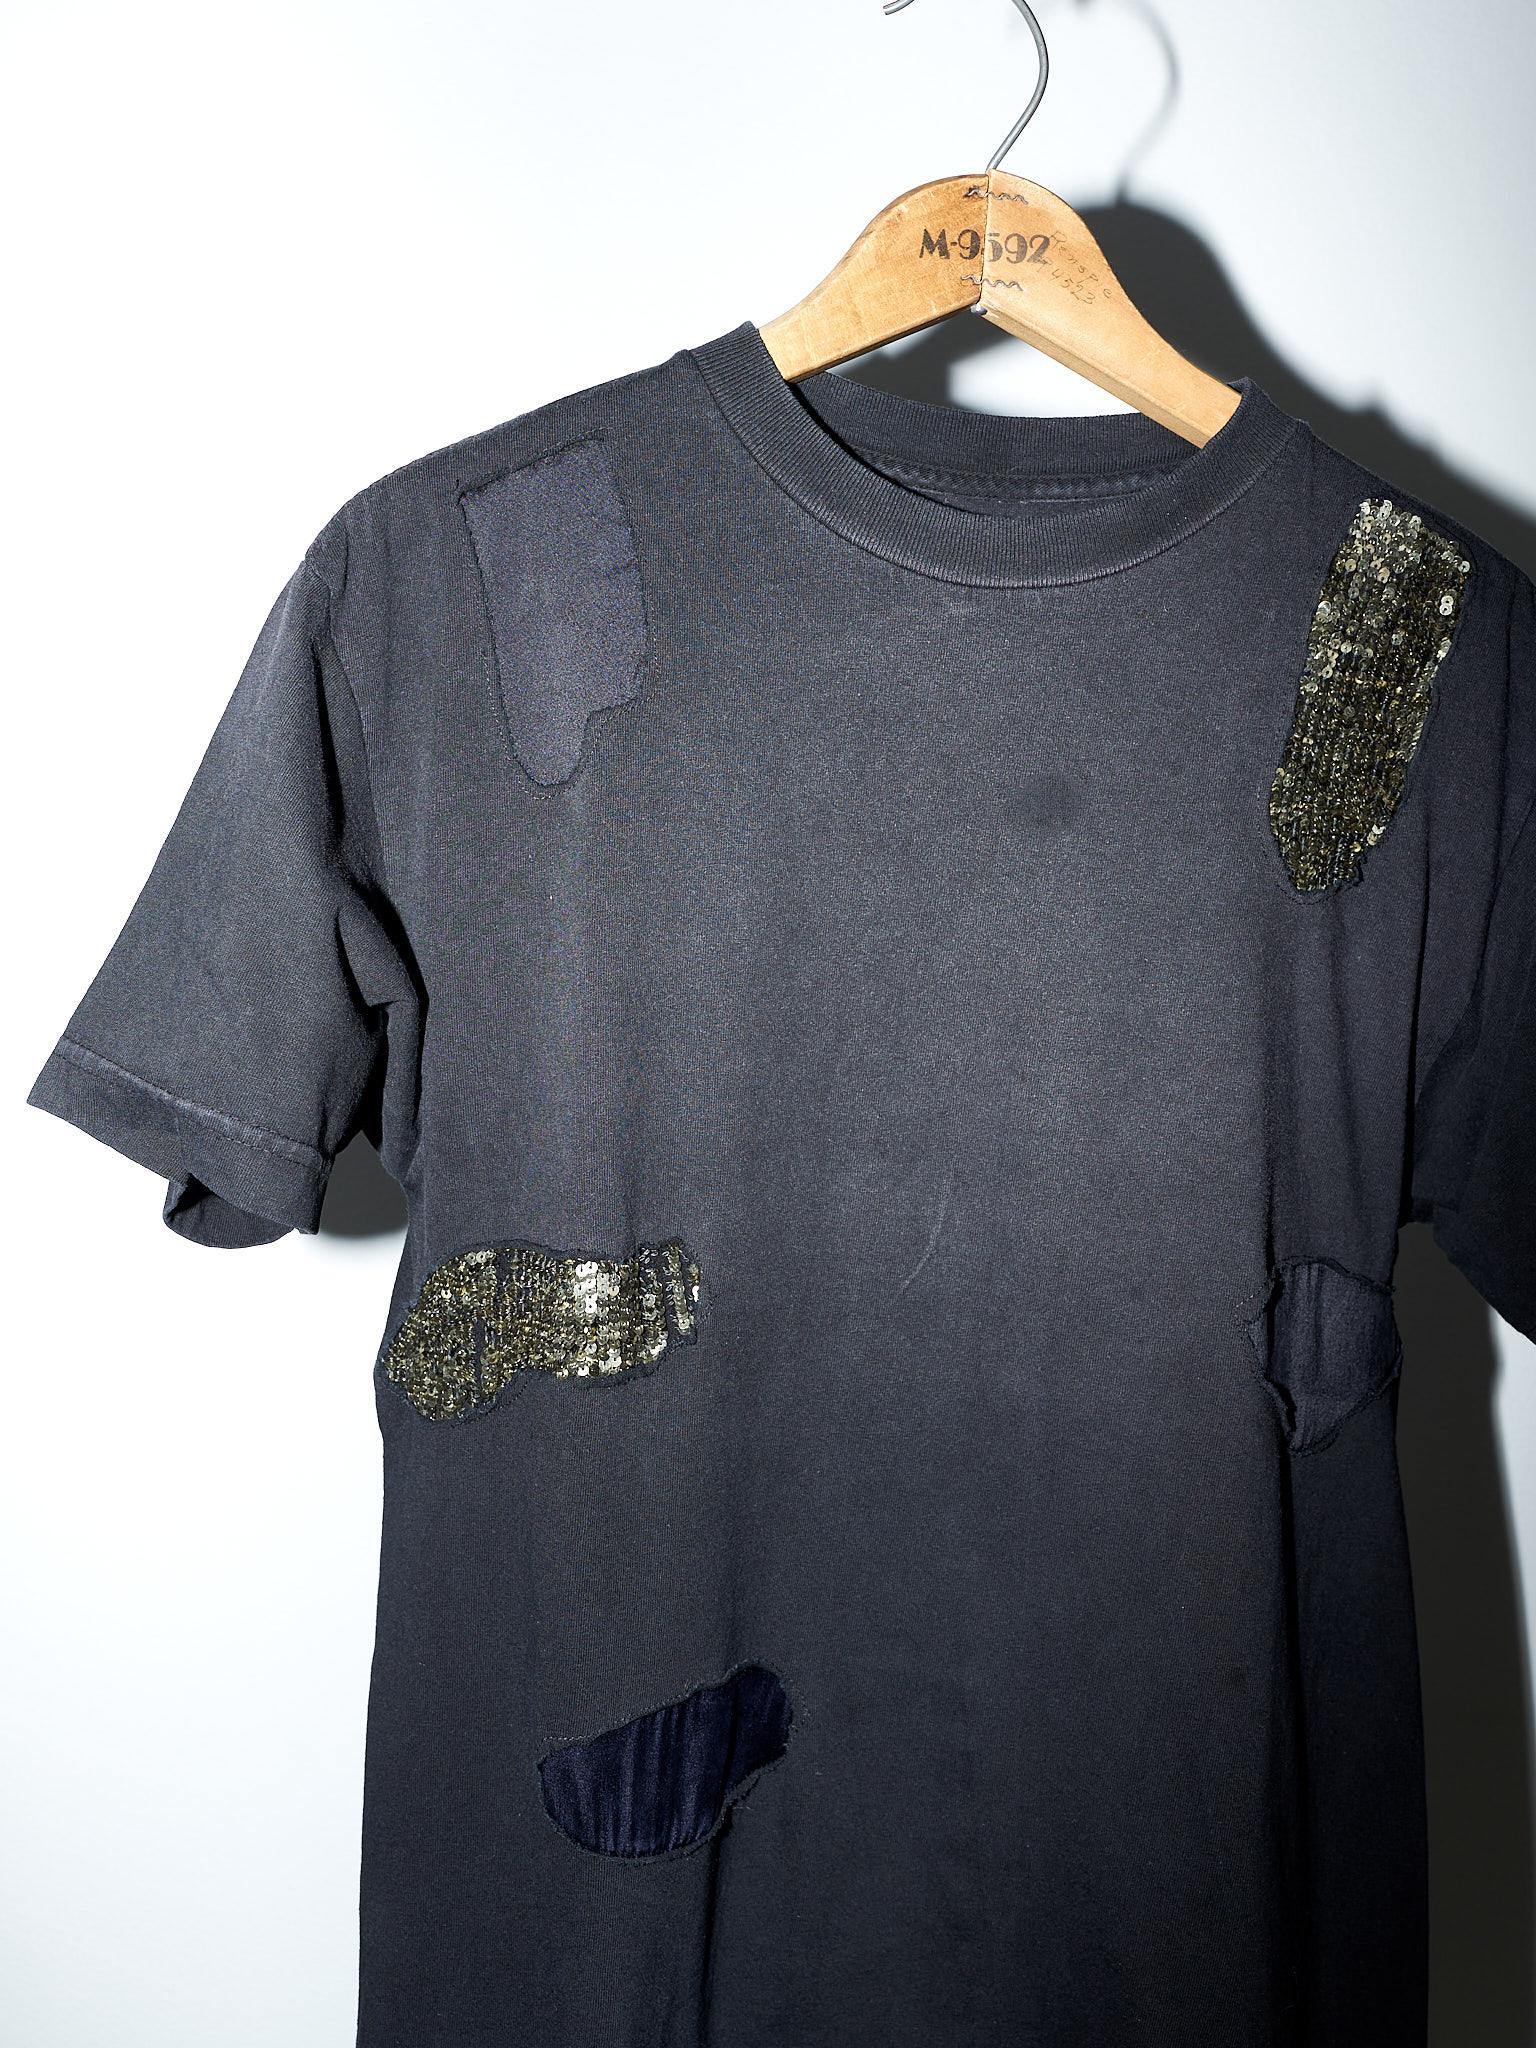 T-Shirt Black Embellished Sequin Silk Cotton Top J Dauphin 4